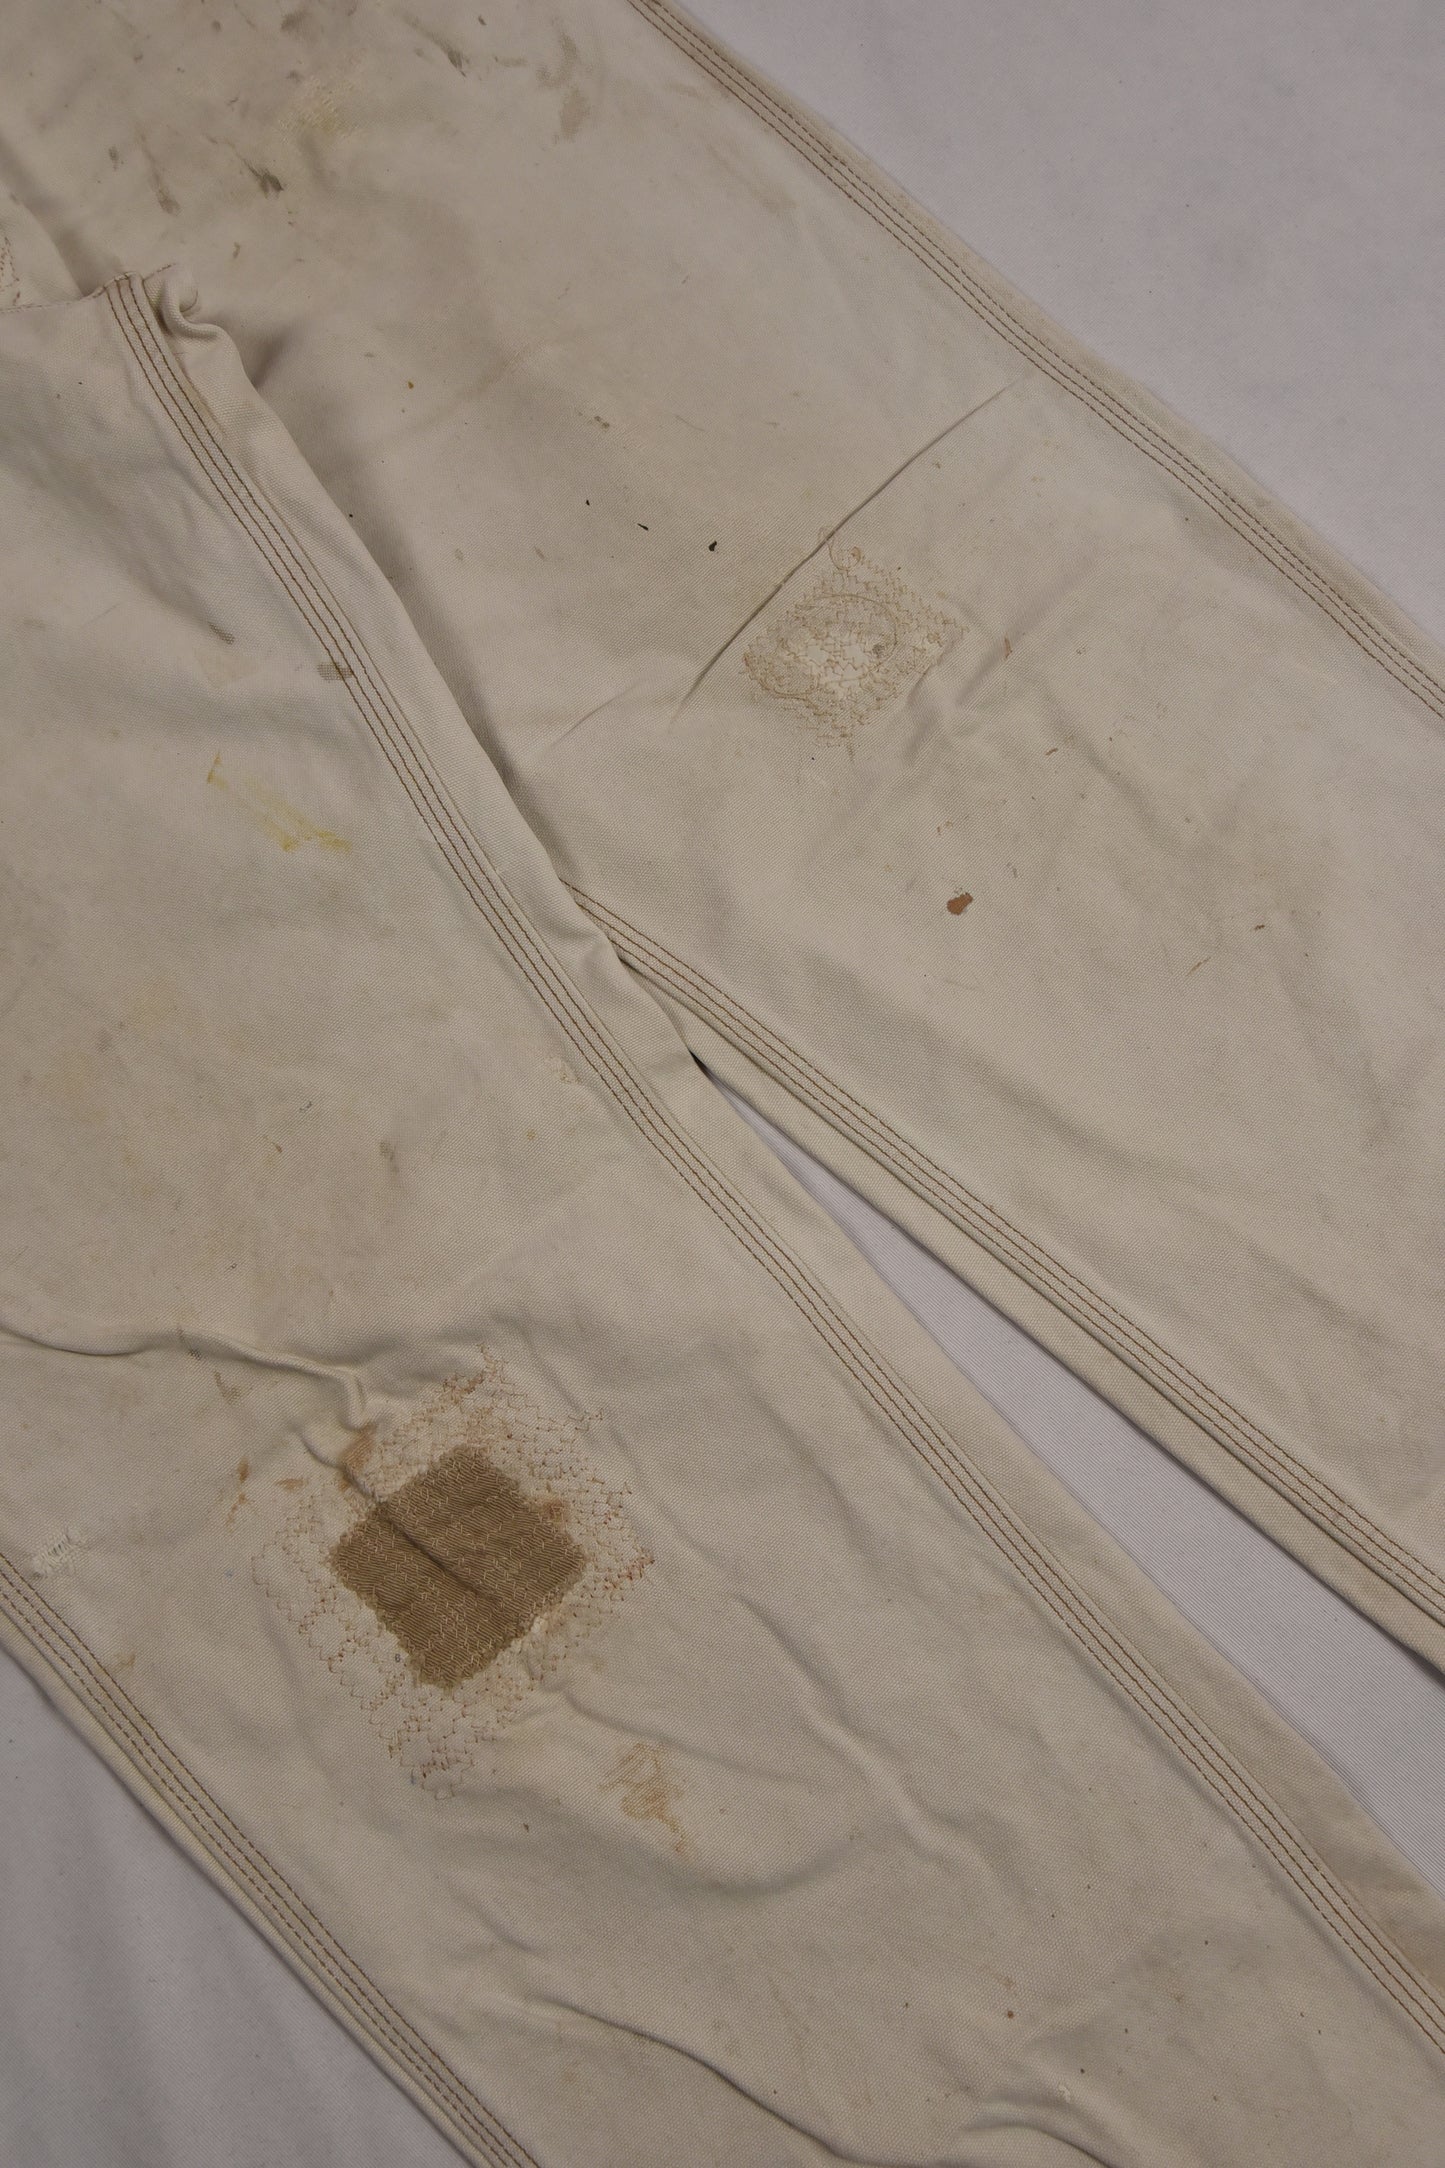 Pantaloni da lavoro Carhartt Vintage / 34x32